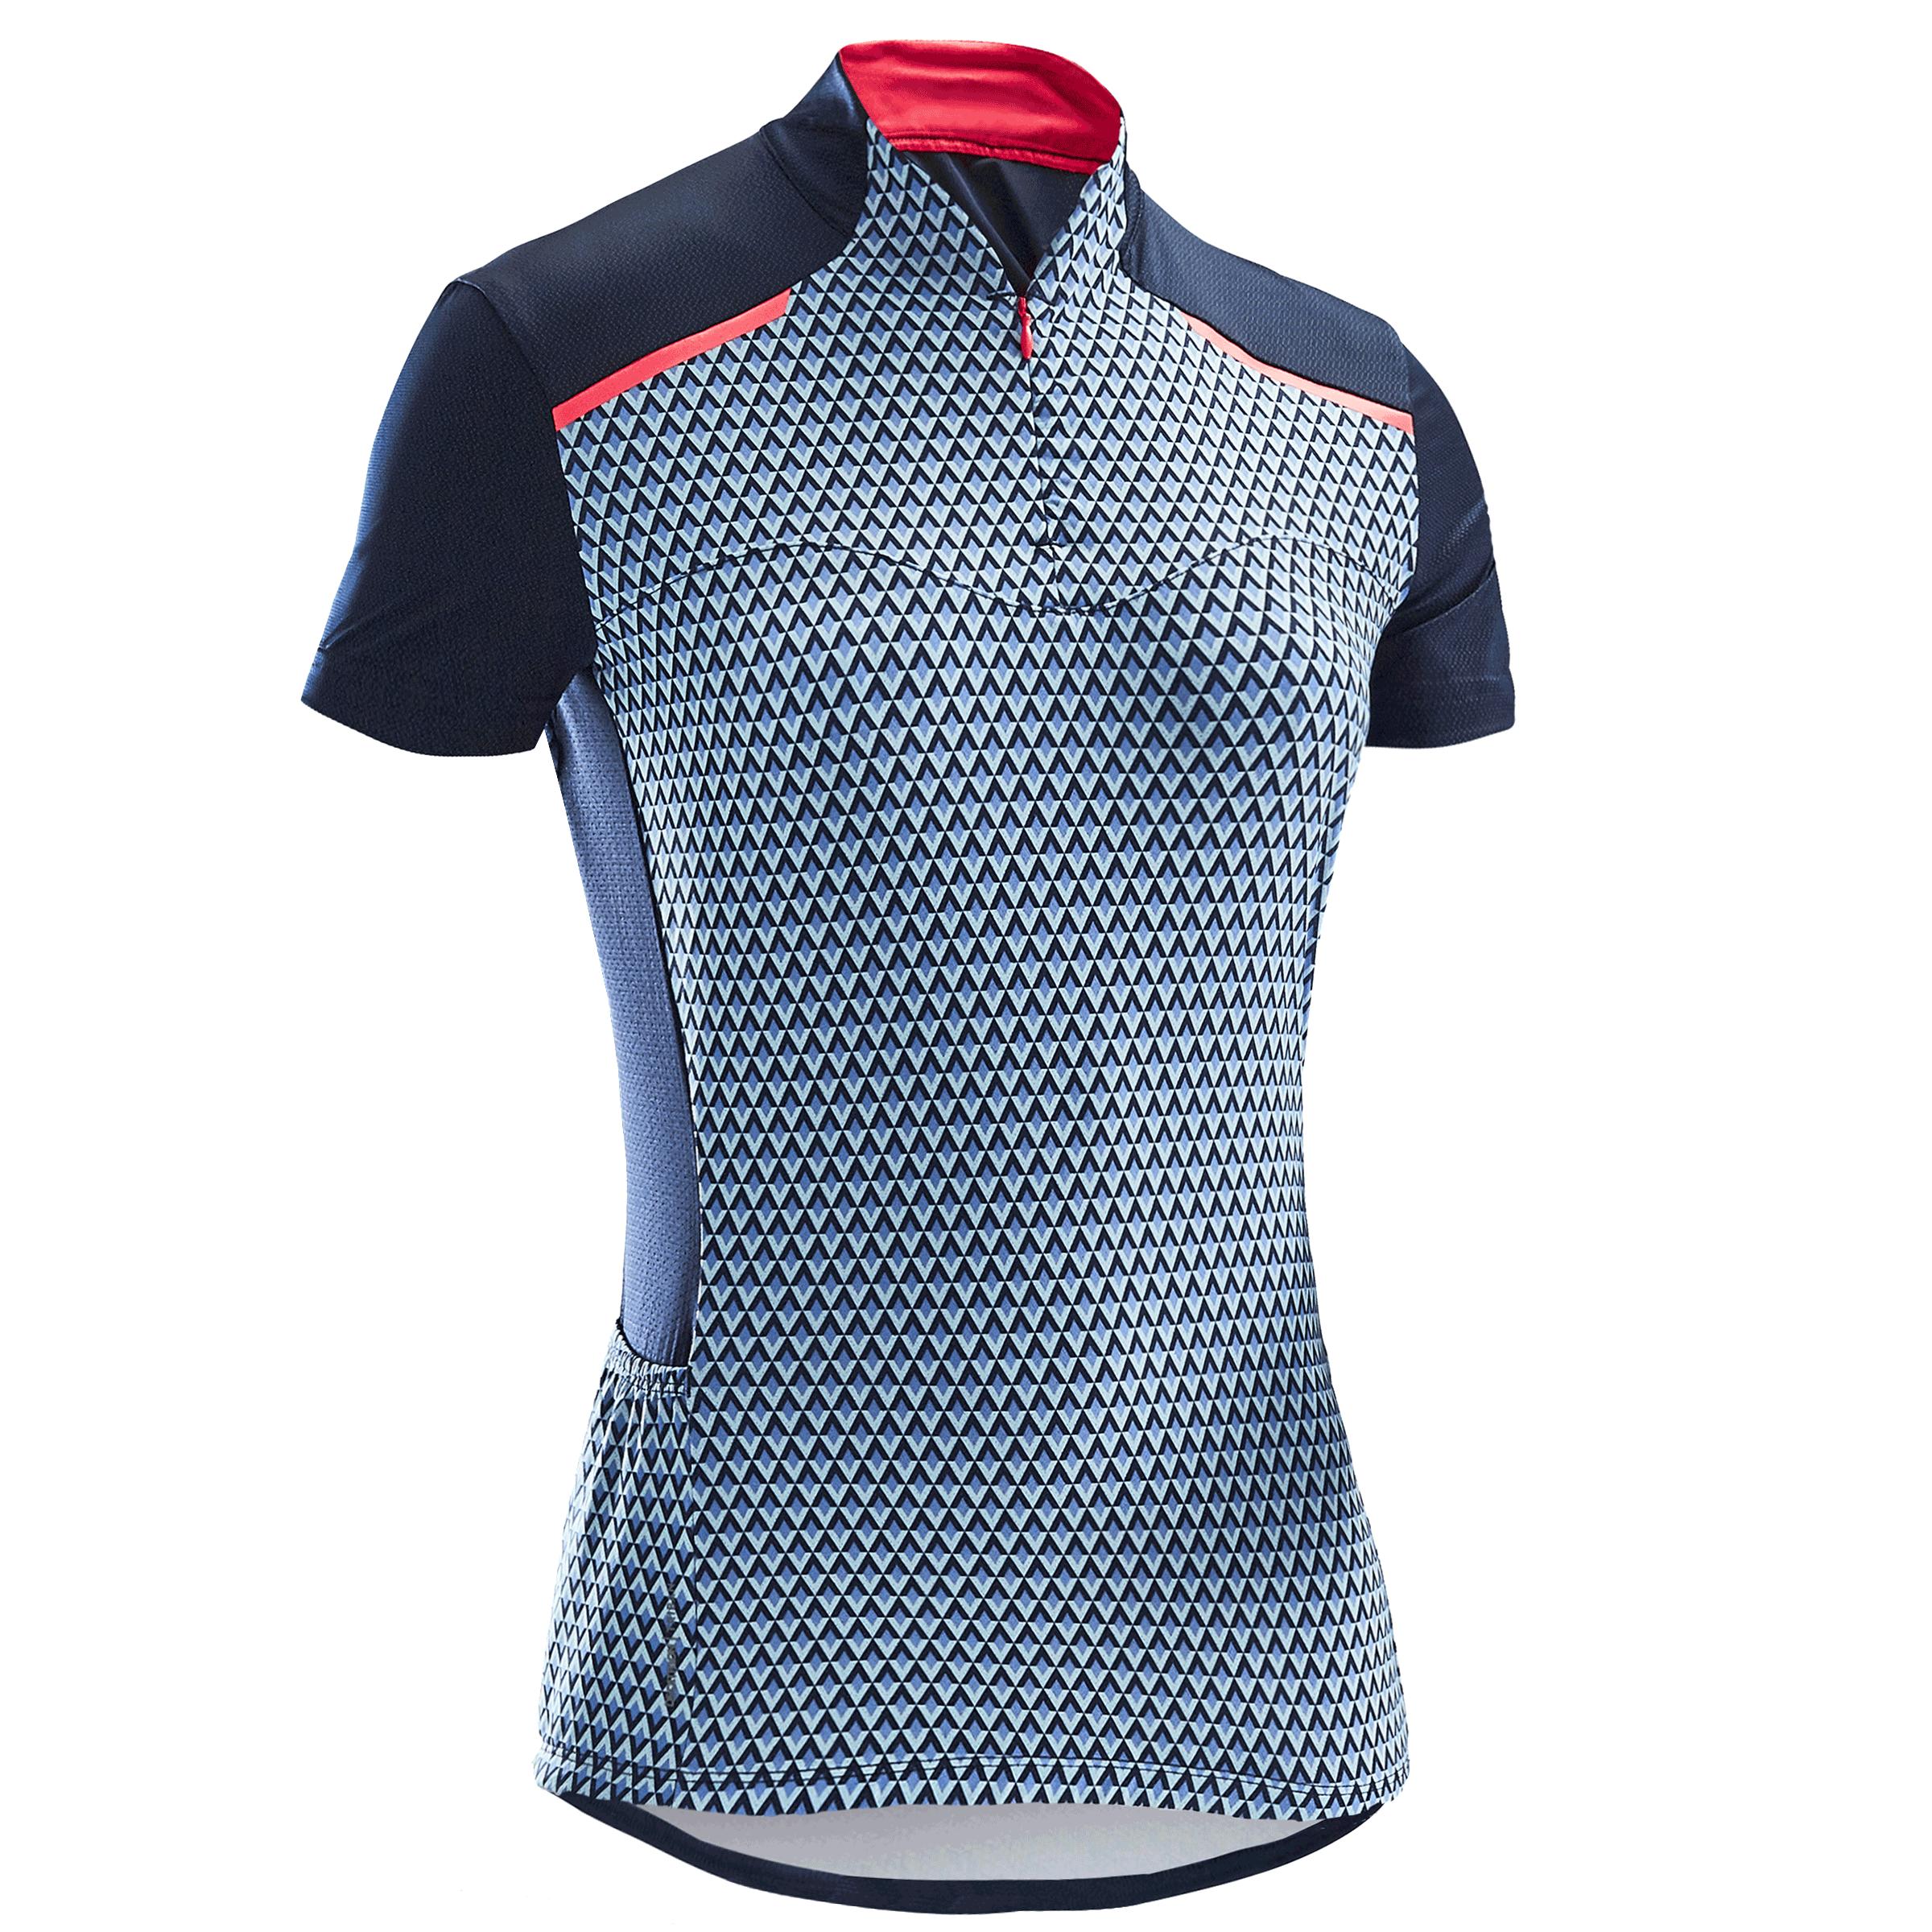 TRIBAN 500 Women's Short-Sleeved Cycling Jersey - Blue Geometric